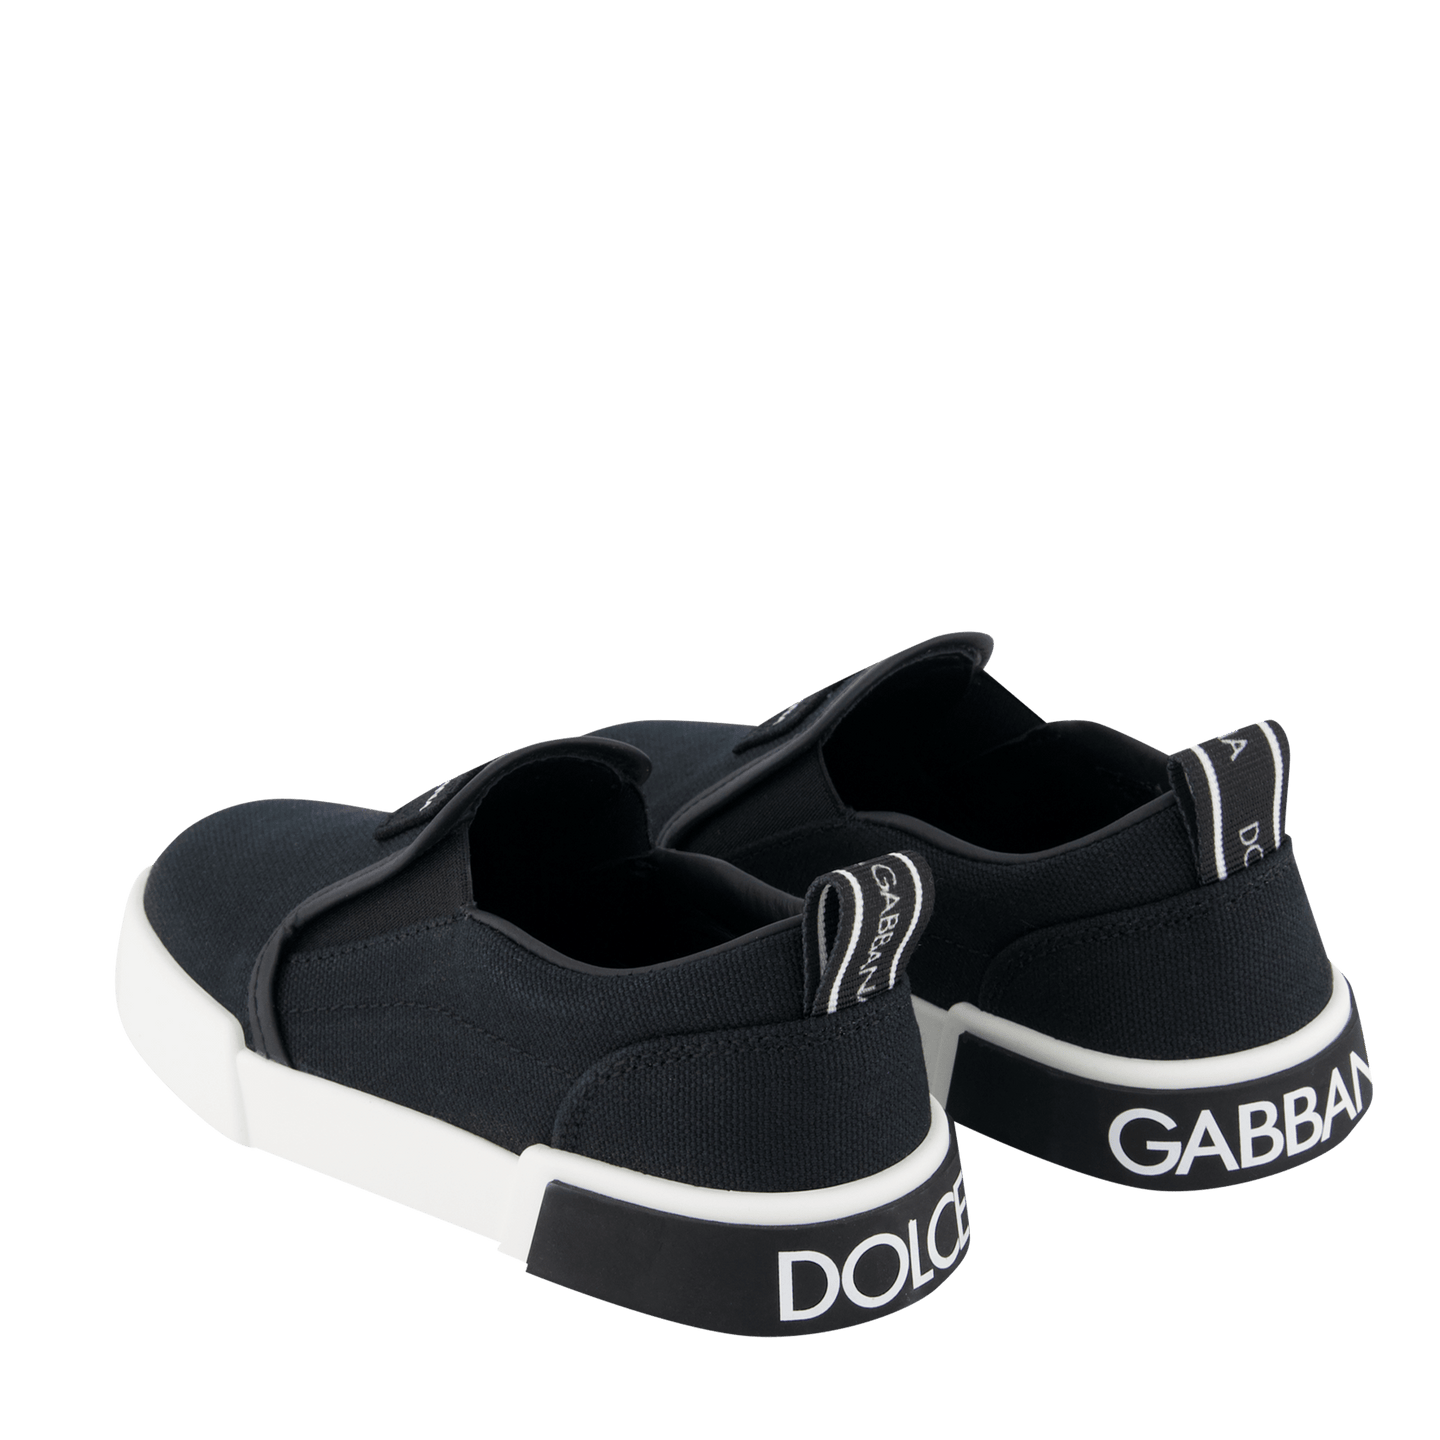 Dolce & Gabbana Kinder Jongens Schoenen Zwart 27